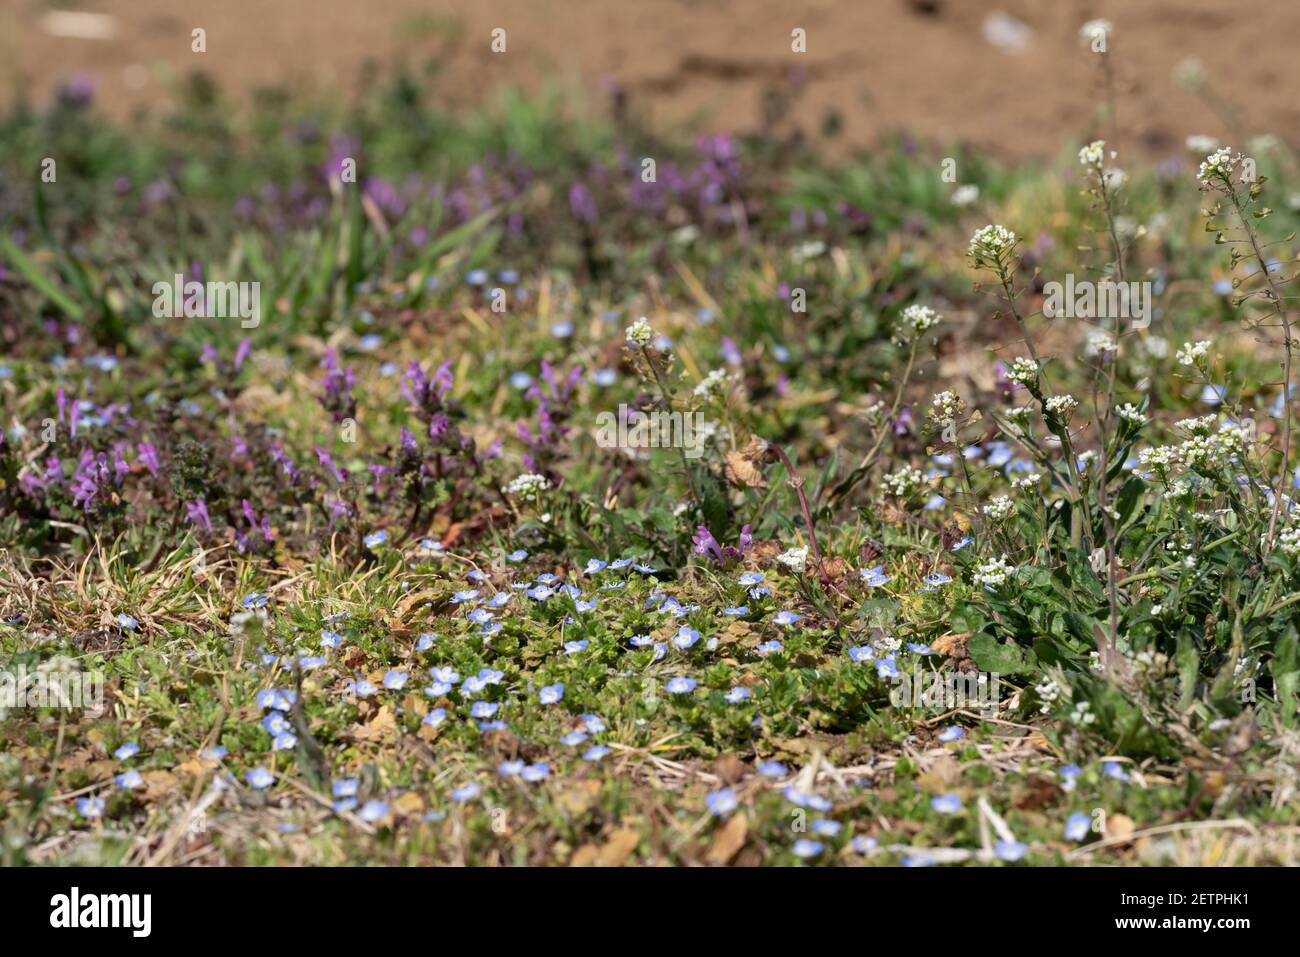 Spring field in early spring, Isehara City, Kanagawa Prefecture, Japan. Veronica persica, Lamium amplexicaule, Capsella bursa-pastoris are seen. Stock Photo